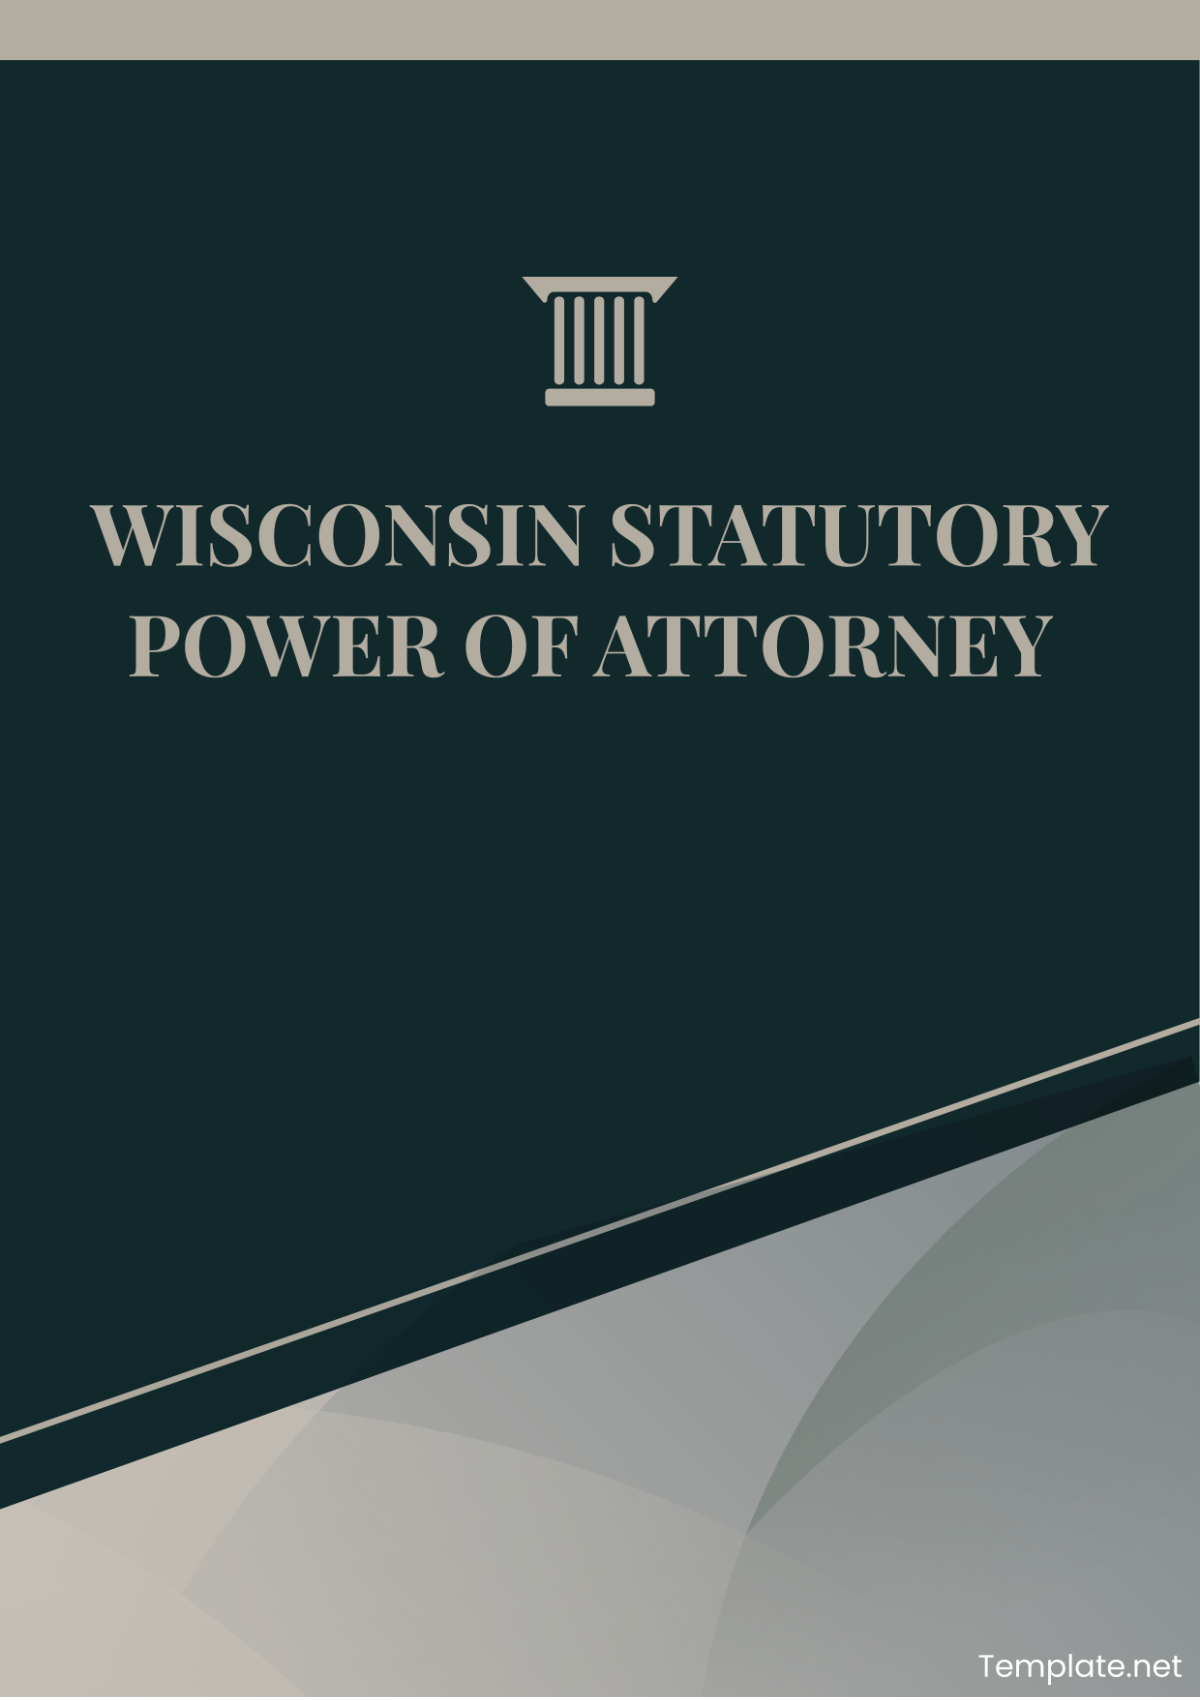 Wisconsin Statutory Power of Attorney Template